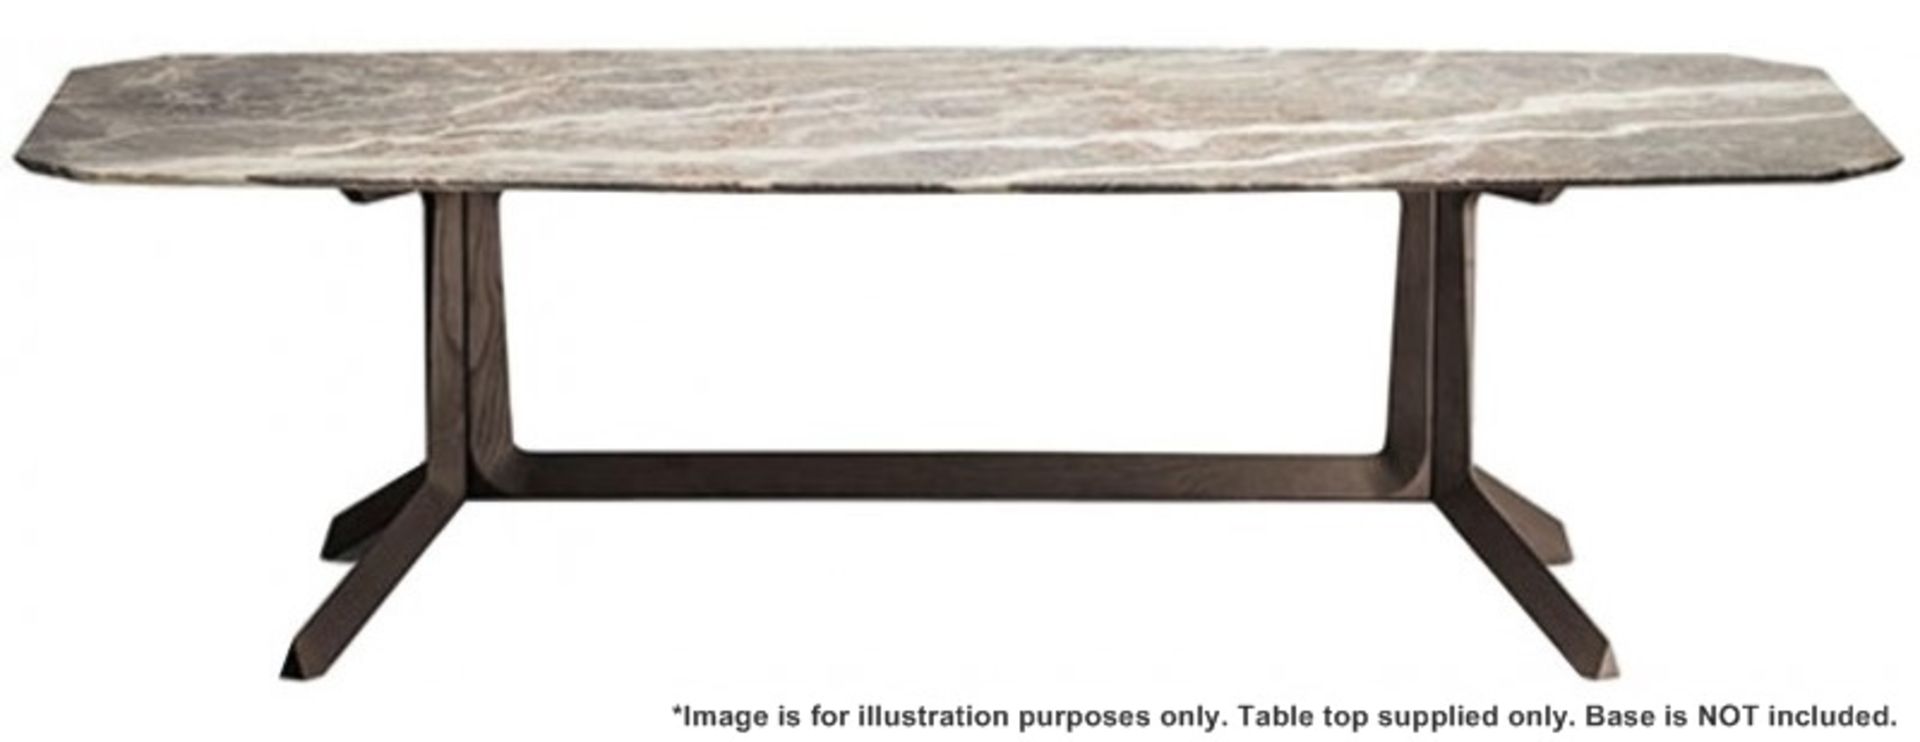 1 x POLTRONA FRAU 'Othello' Fior Di Pesco 2.6 Metre Long Marble Table Top - Dimensions: 260x100cm - Image 4 of 6